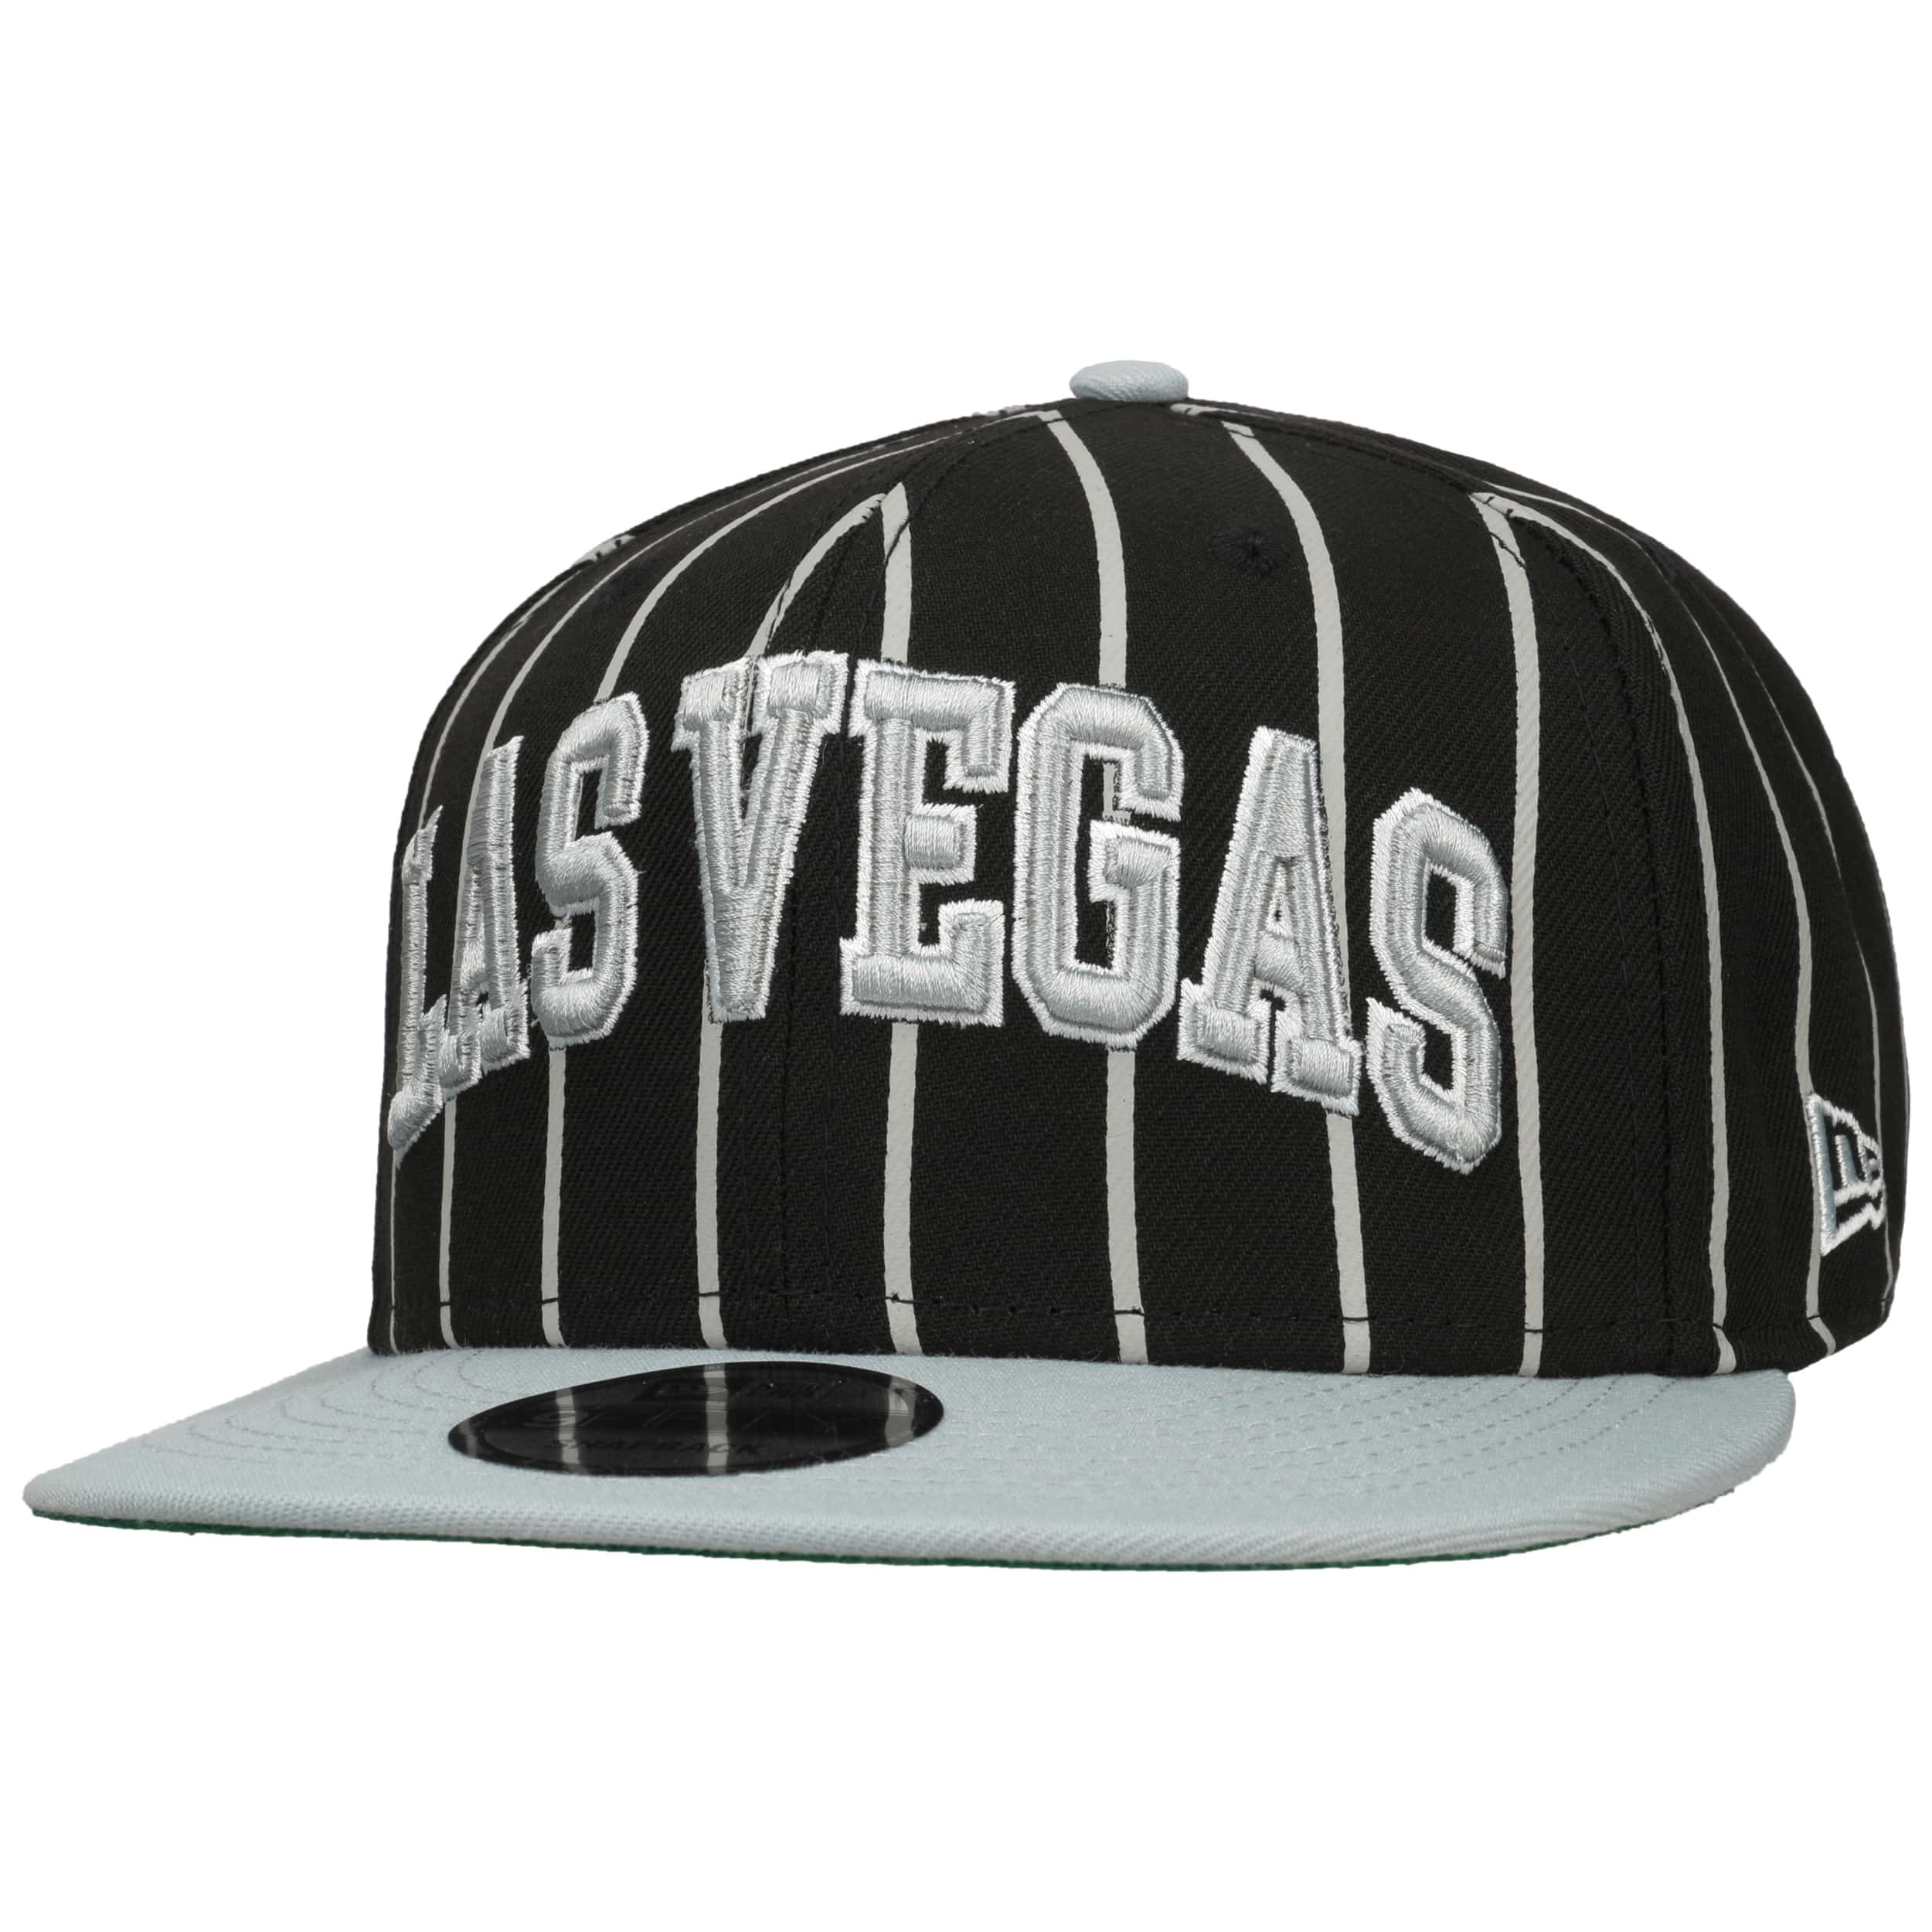 Las Vegas Raiders STRIPED Knit Beanie Hat by New Era